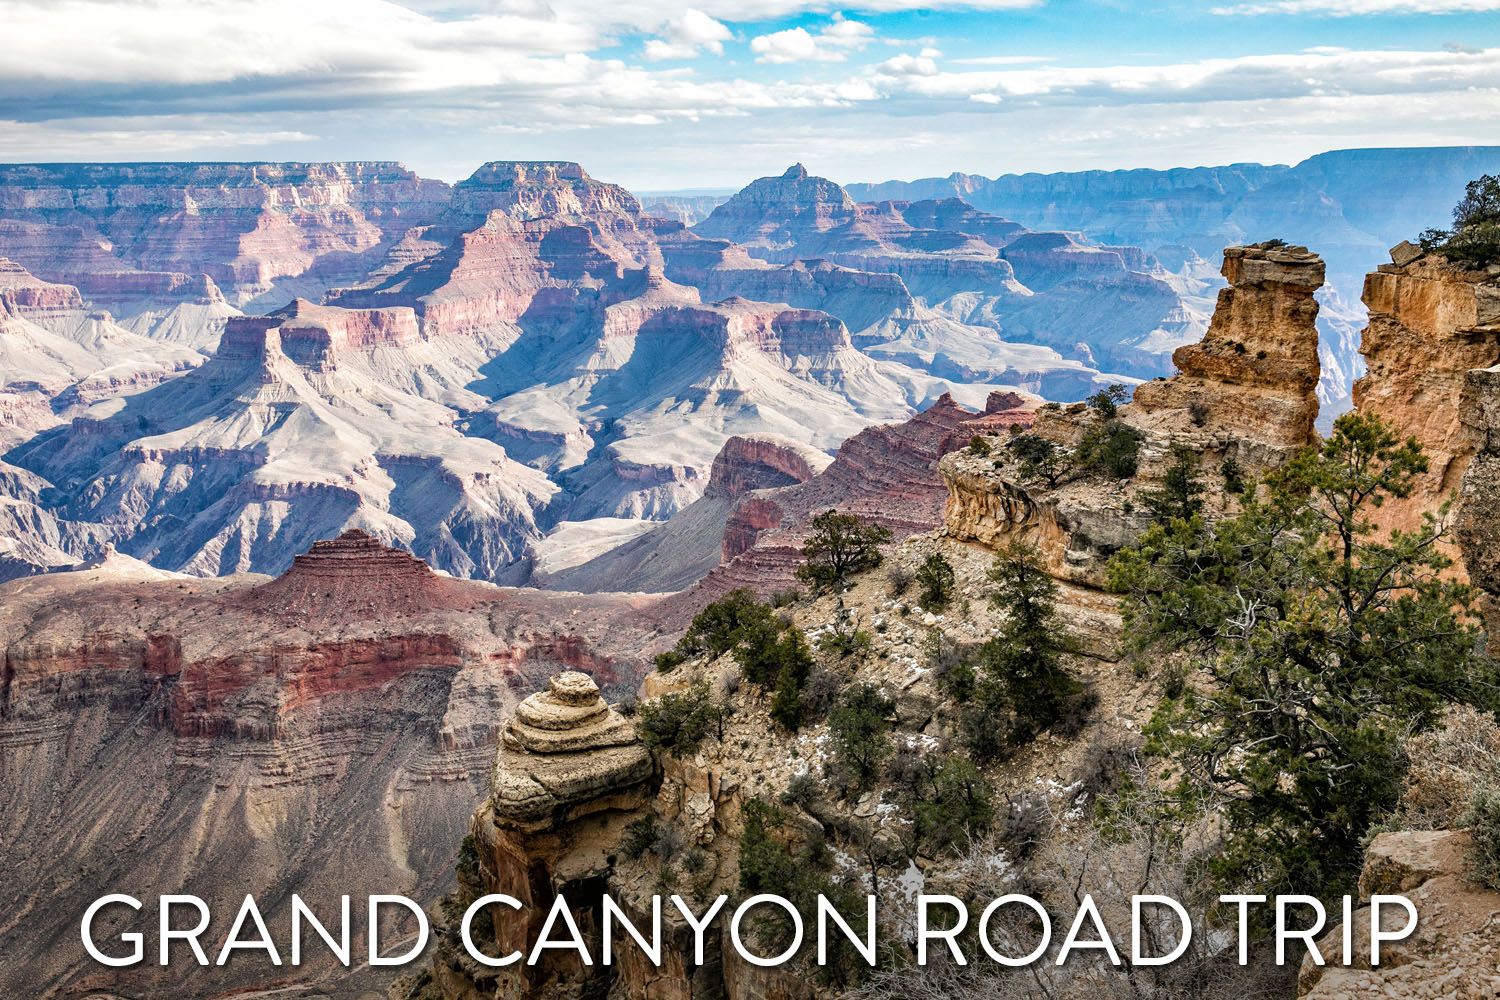 Grand Canyon road trip